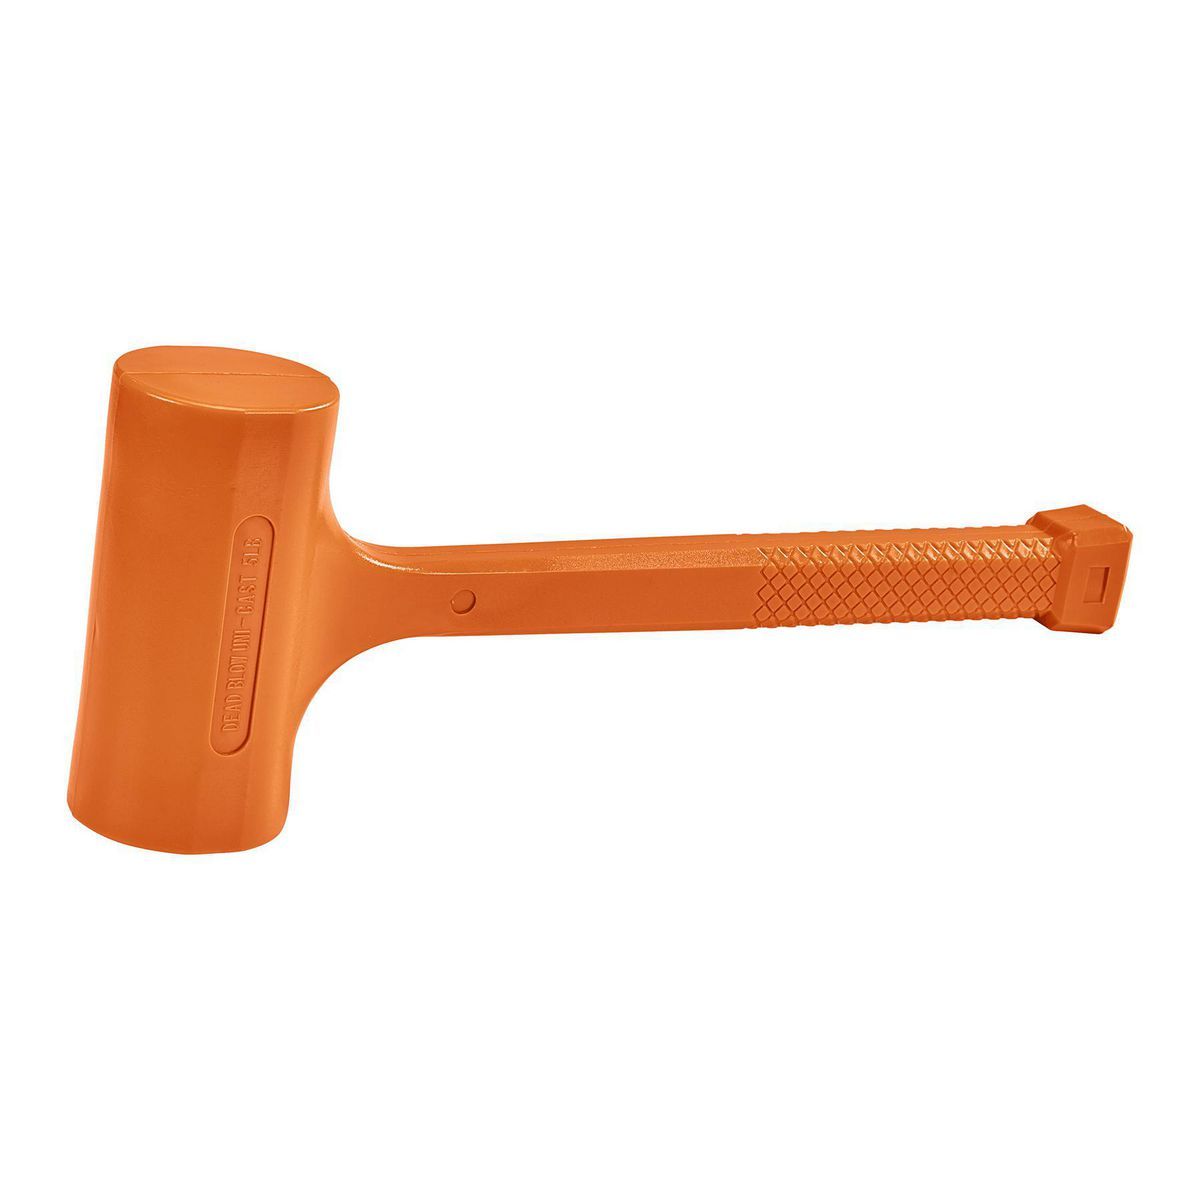 5 lb. Neon Orange Dead Blow Hammer